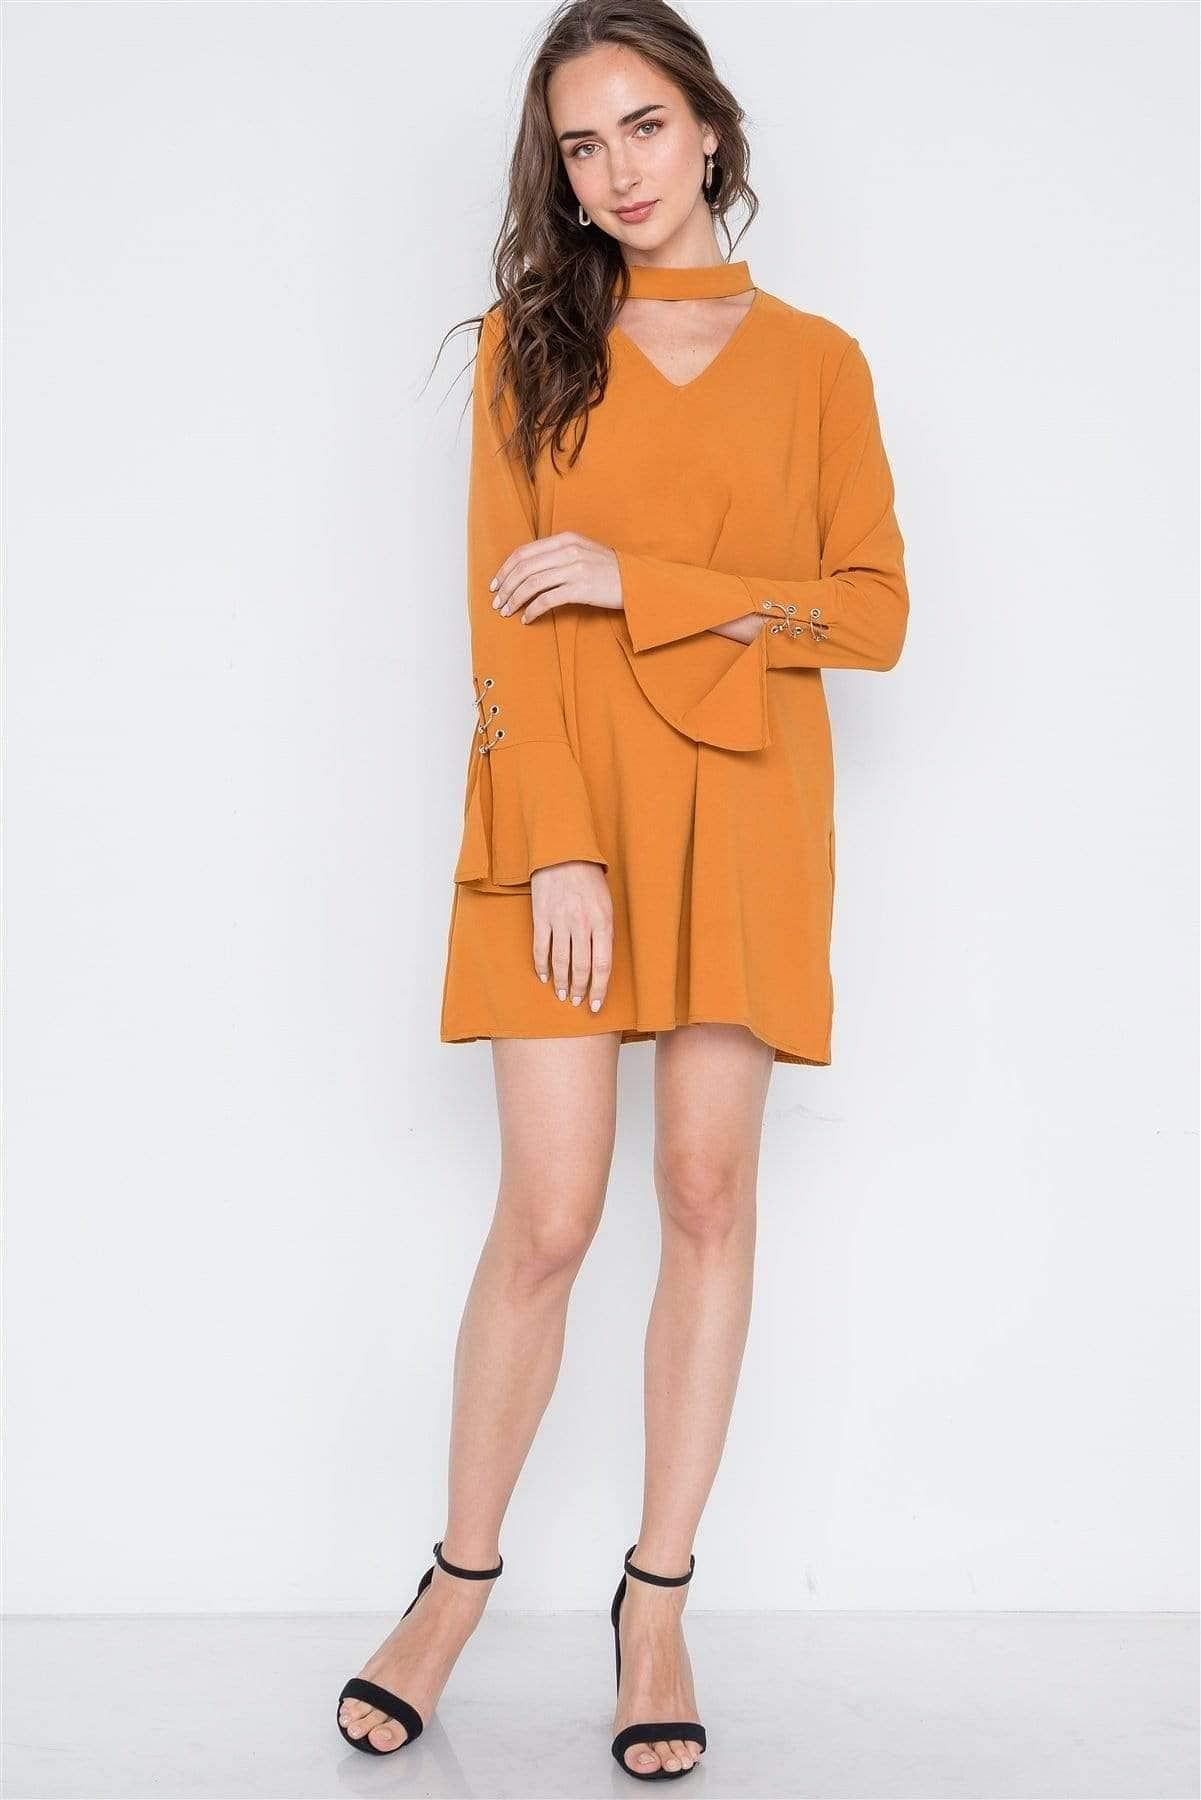 Camel Long Sleeve V-Neck Mini Dress - Shopping Therapy L dress